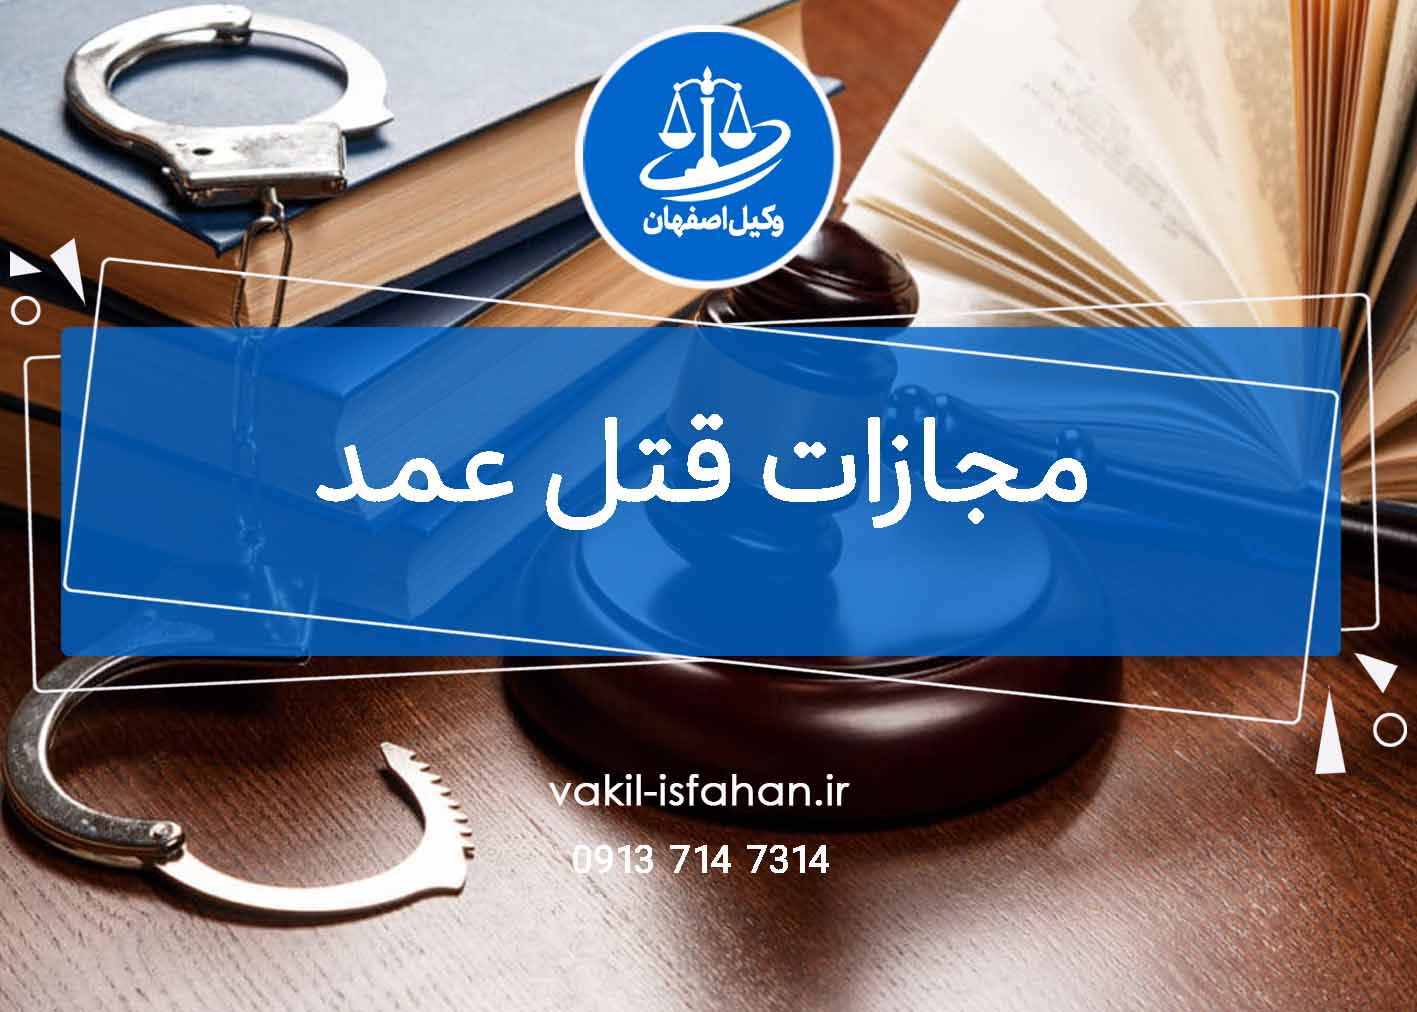 مجازات قتل عمد | وکیل اصفهان